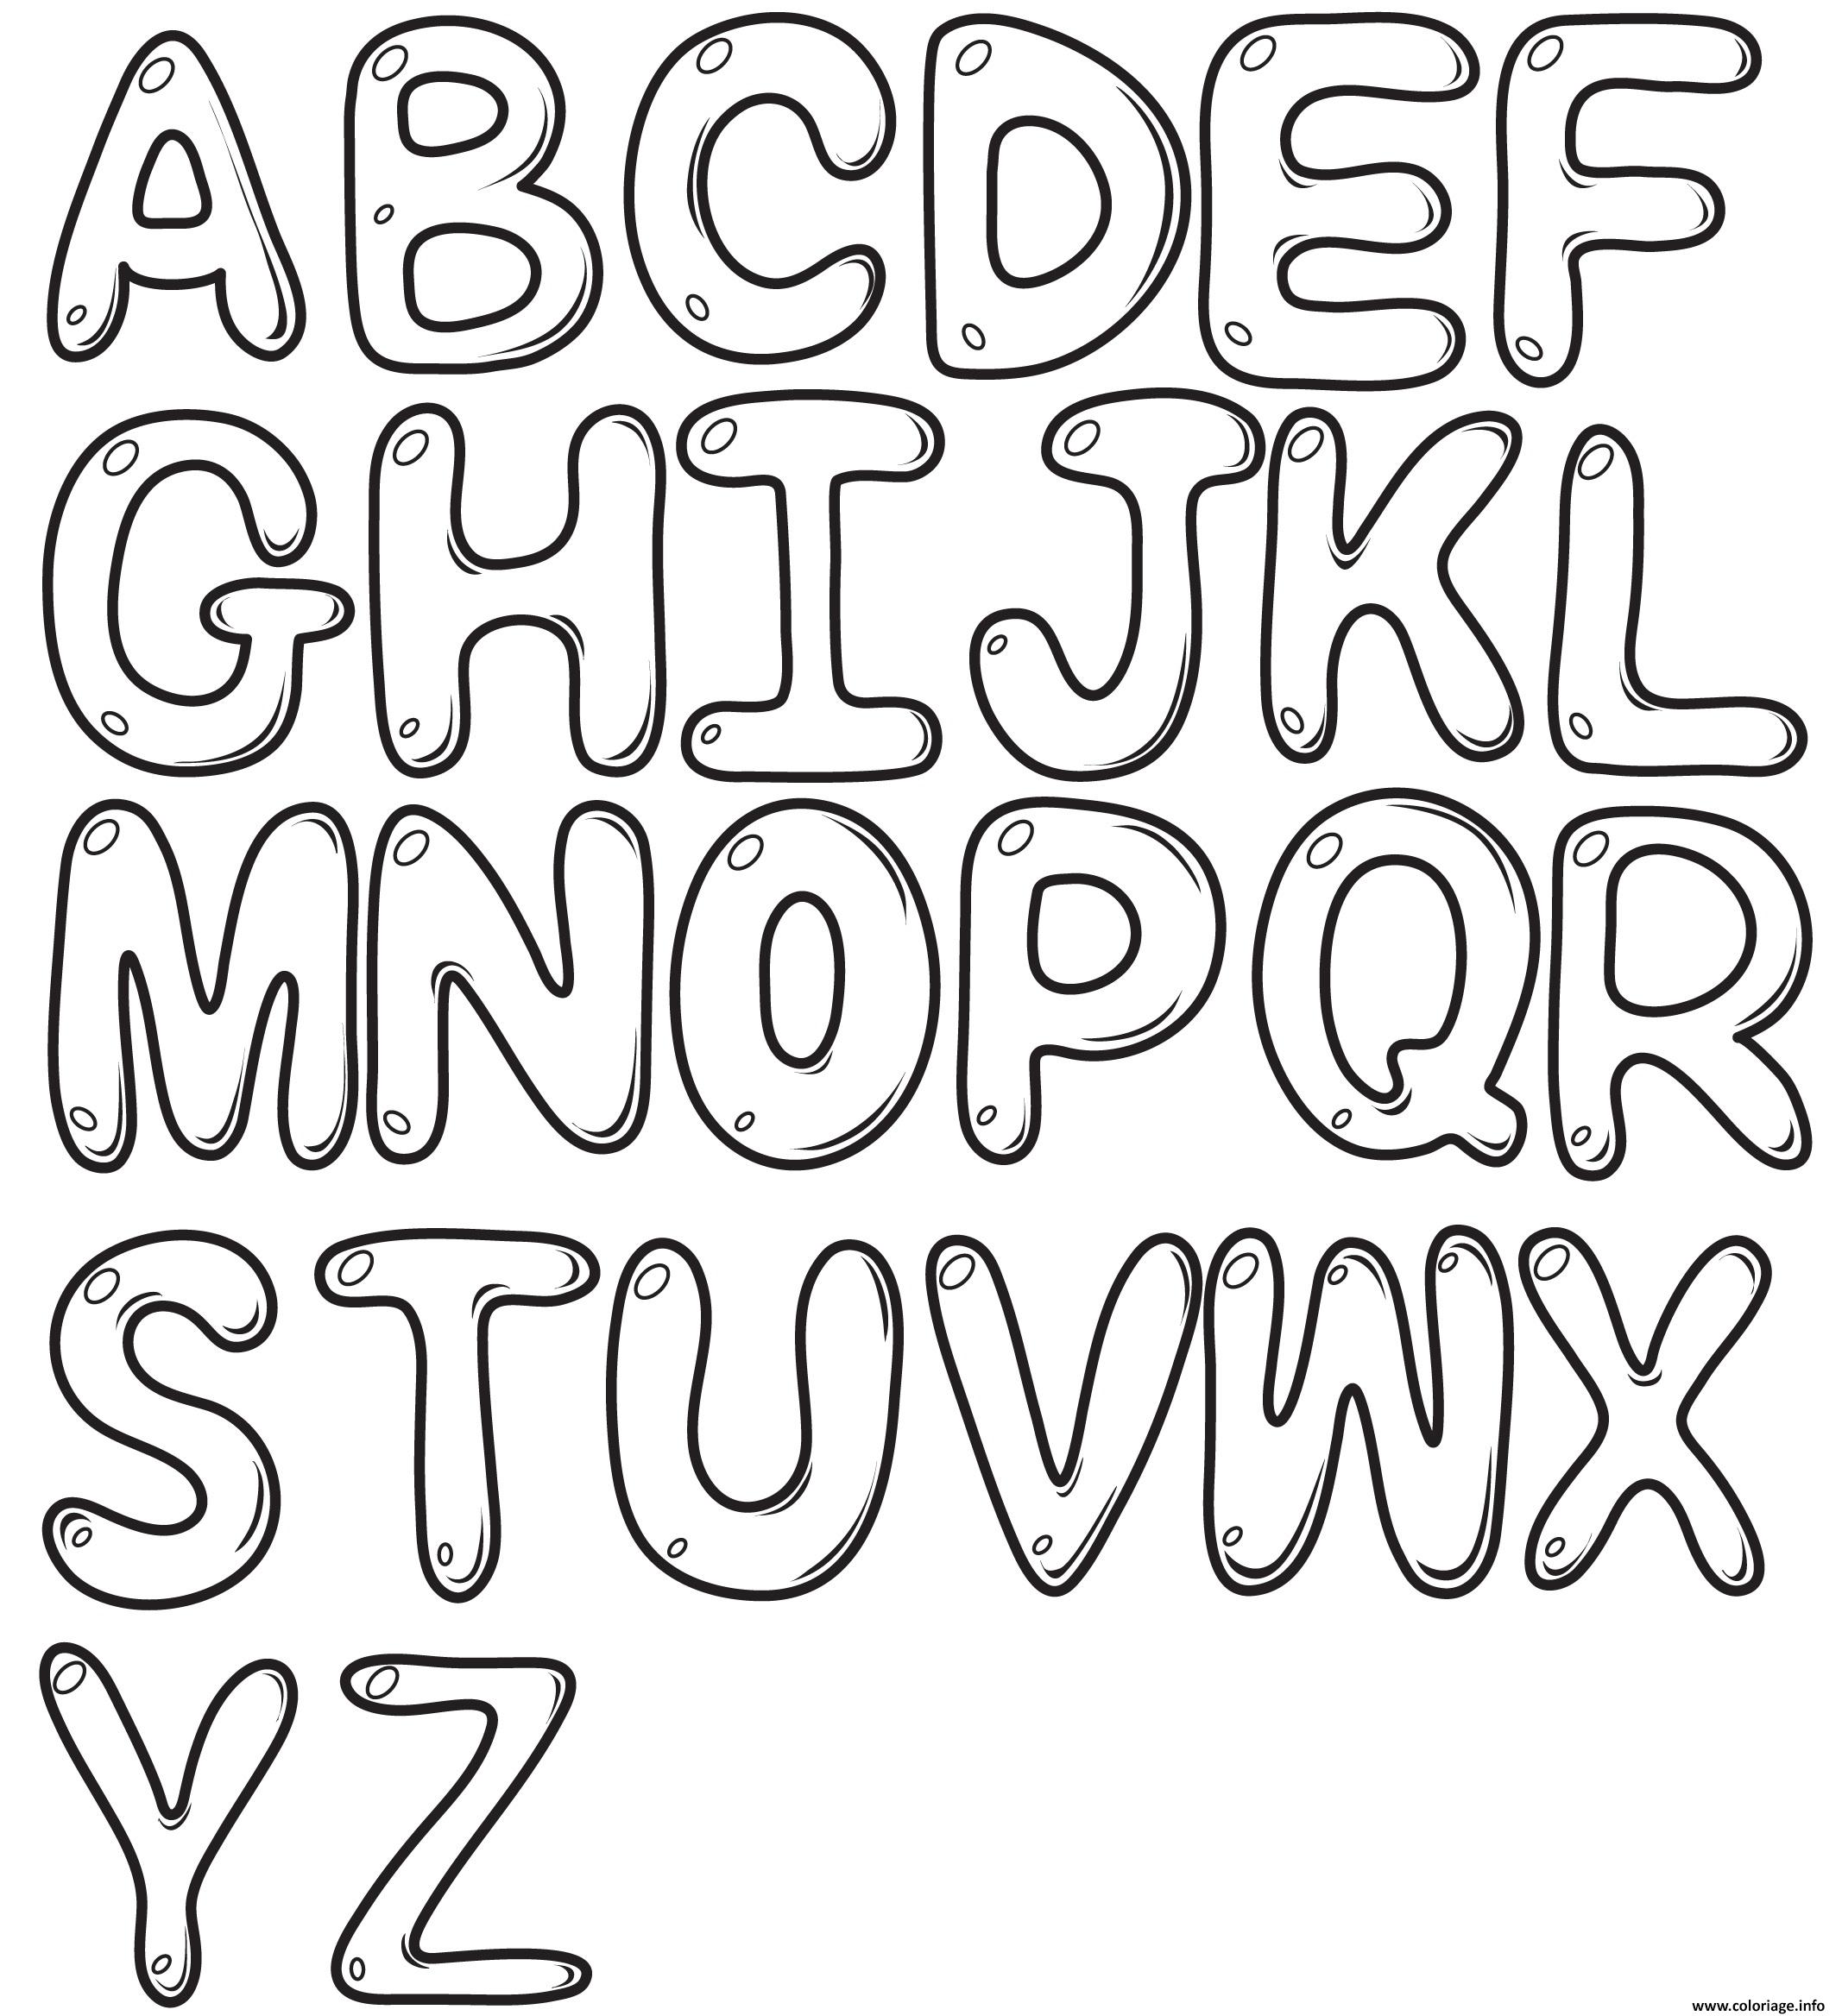 pin-by-ashley-courtney-on-stencils-bubble-letters-alphabet-bubble-letter-fonts-lettering